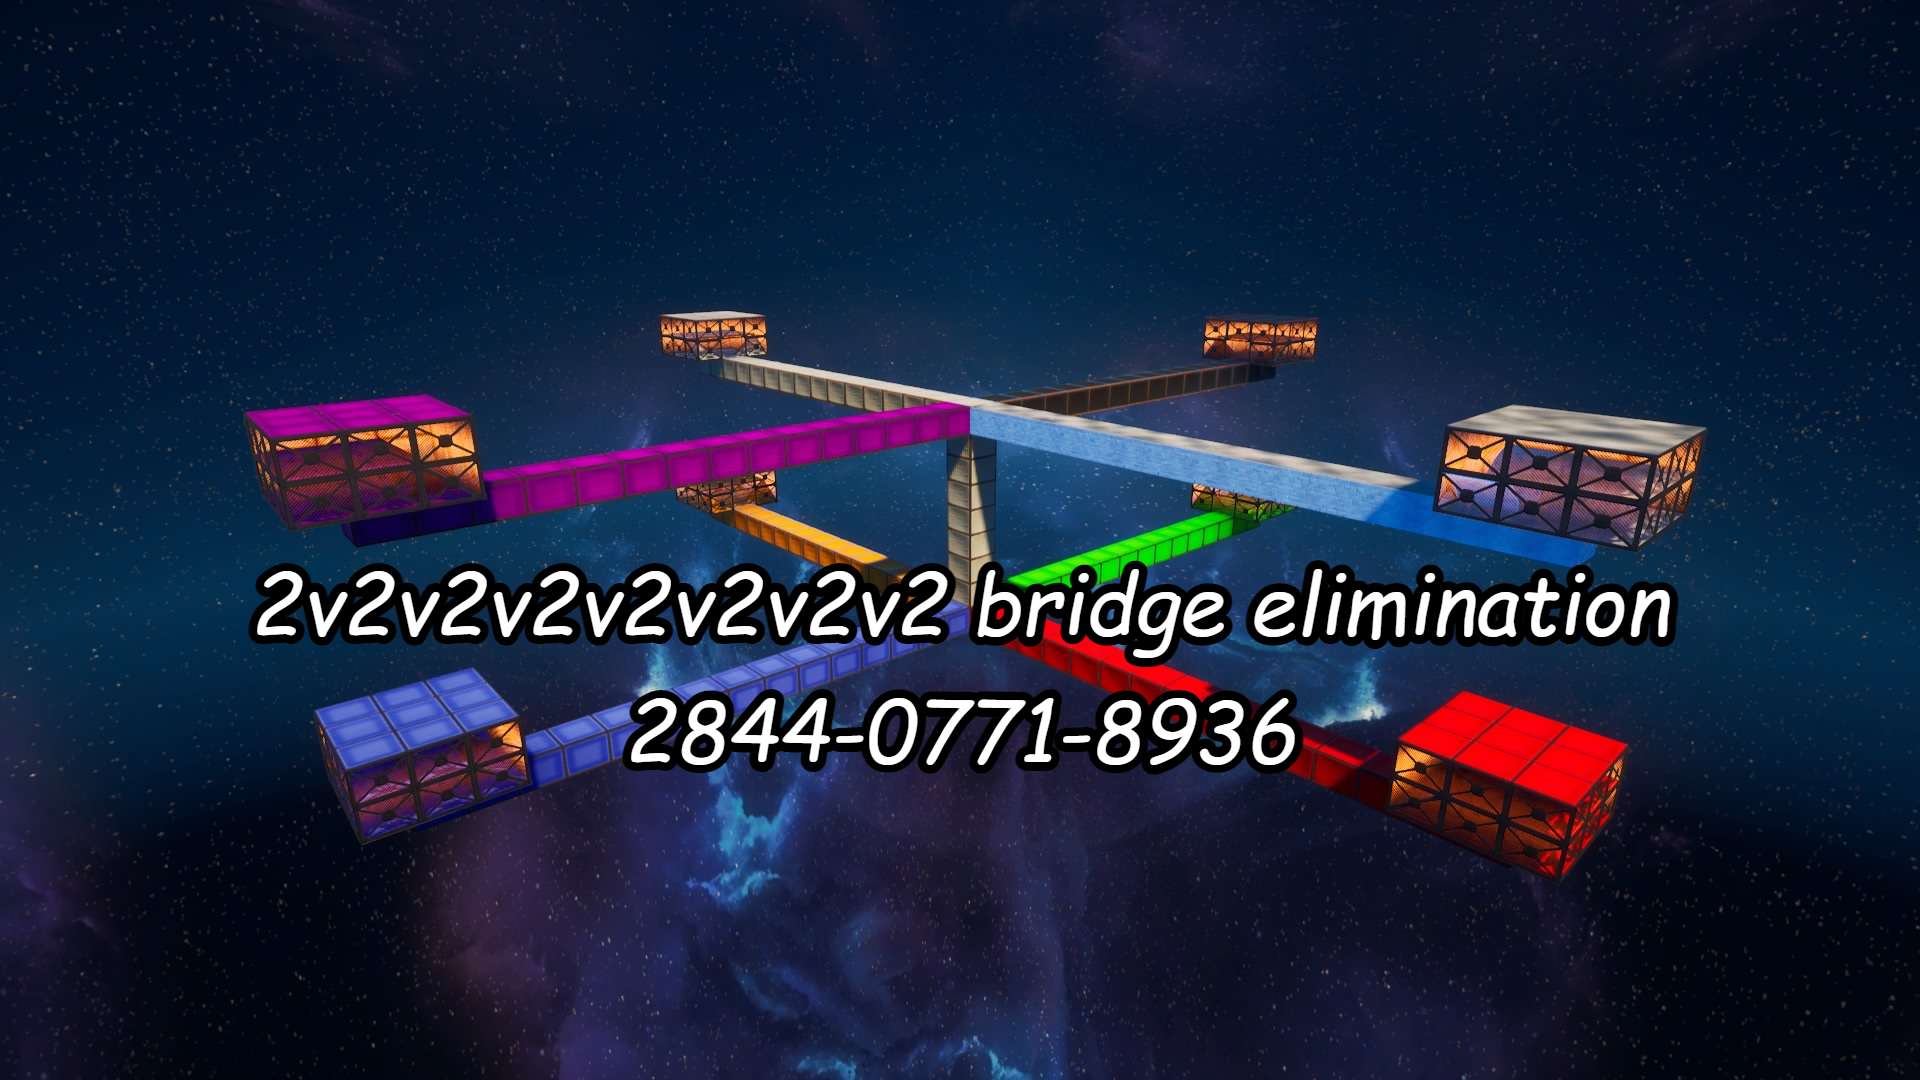 2V2V2V2V2V2V2V2 BRIDGE ELIMINATION